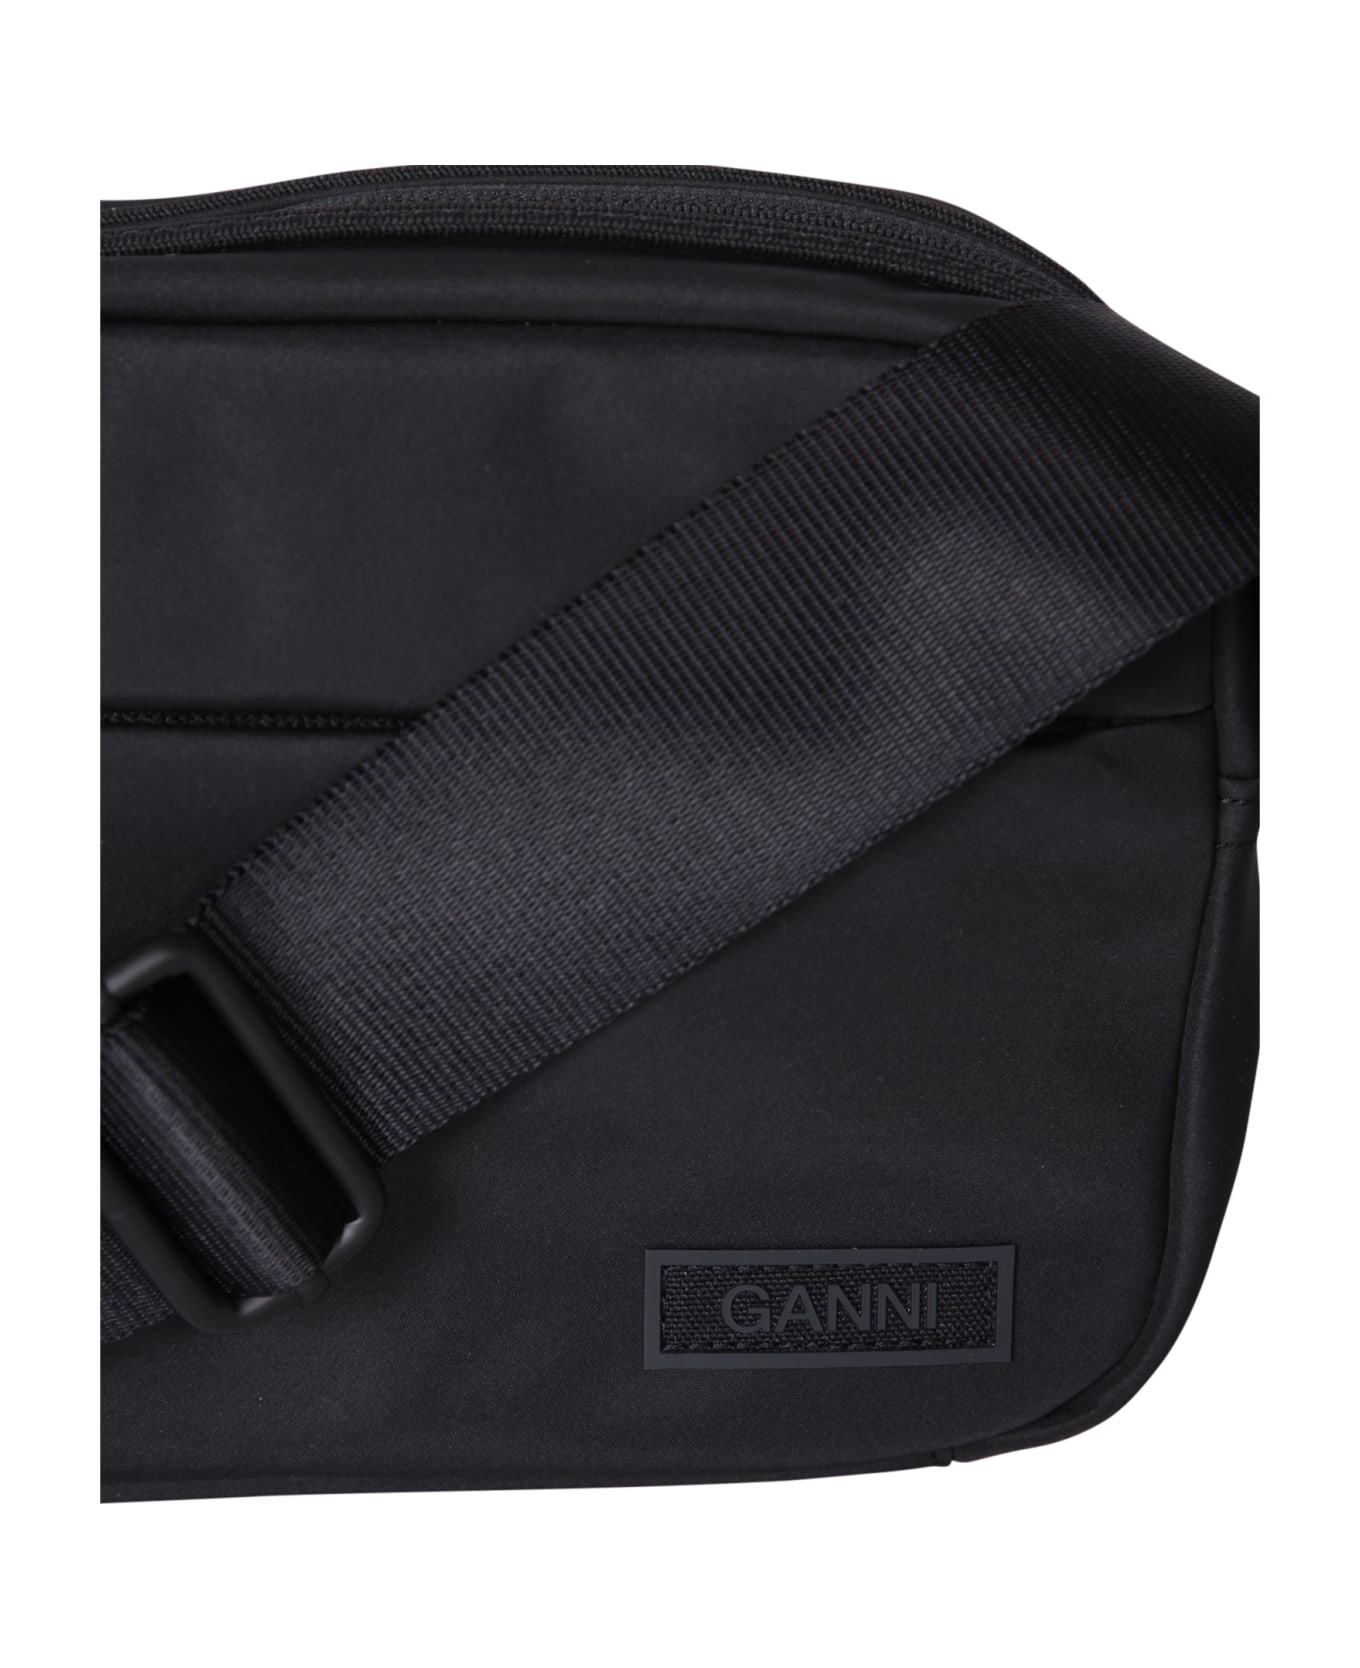 Ganni Mini Festival Bag In Black - Black ベルトバッグ